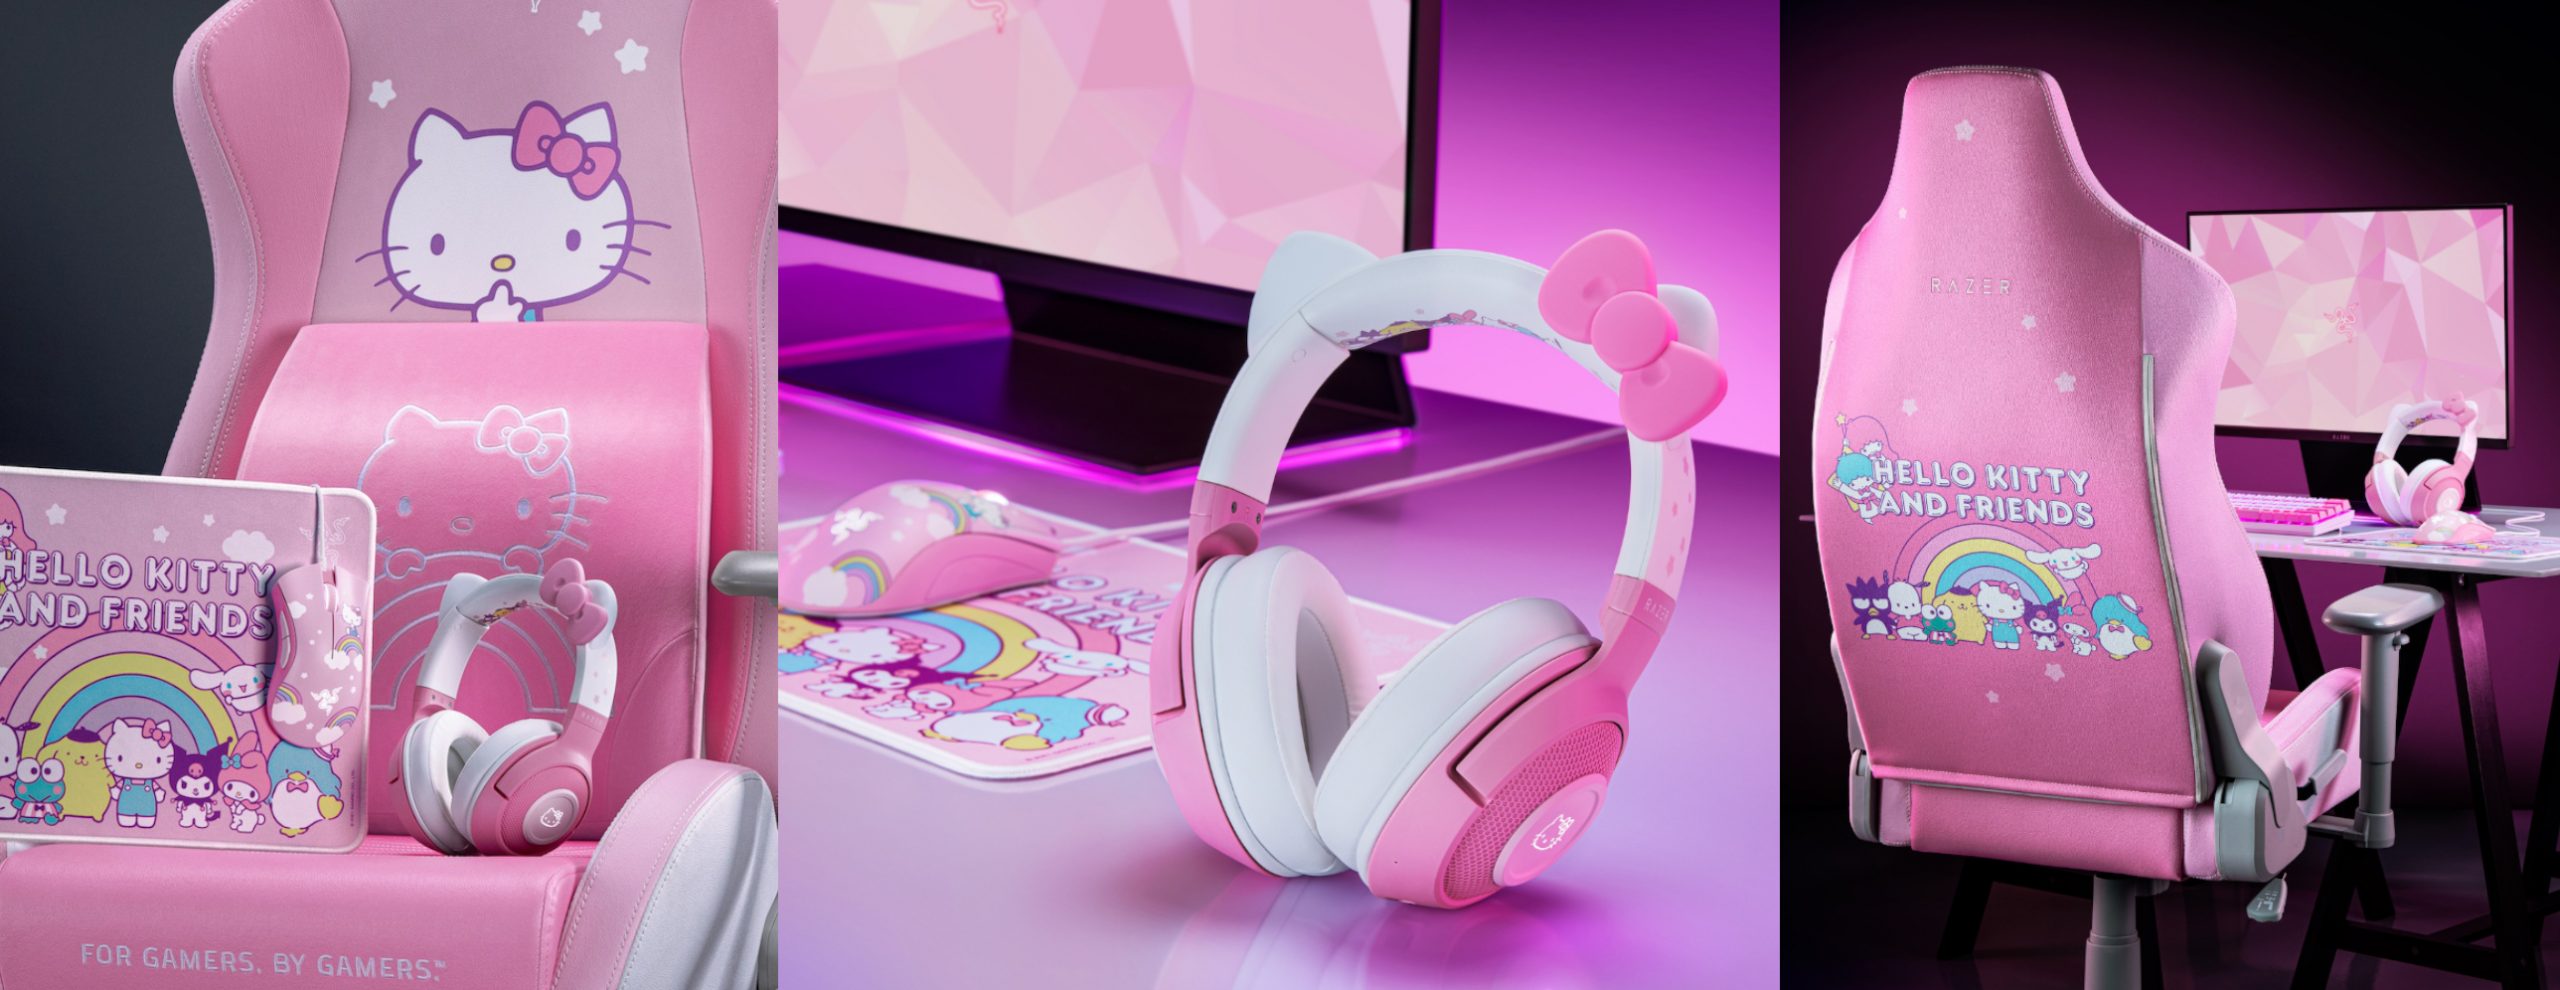 Sanrio Hello Kitty and Friends, Razer Gaming Gear